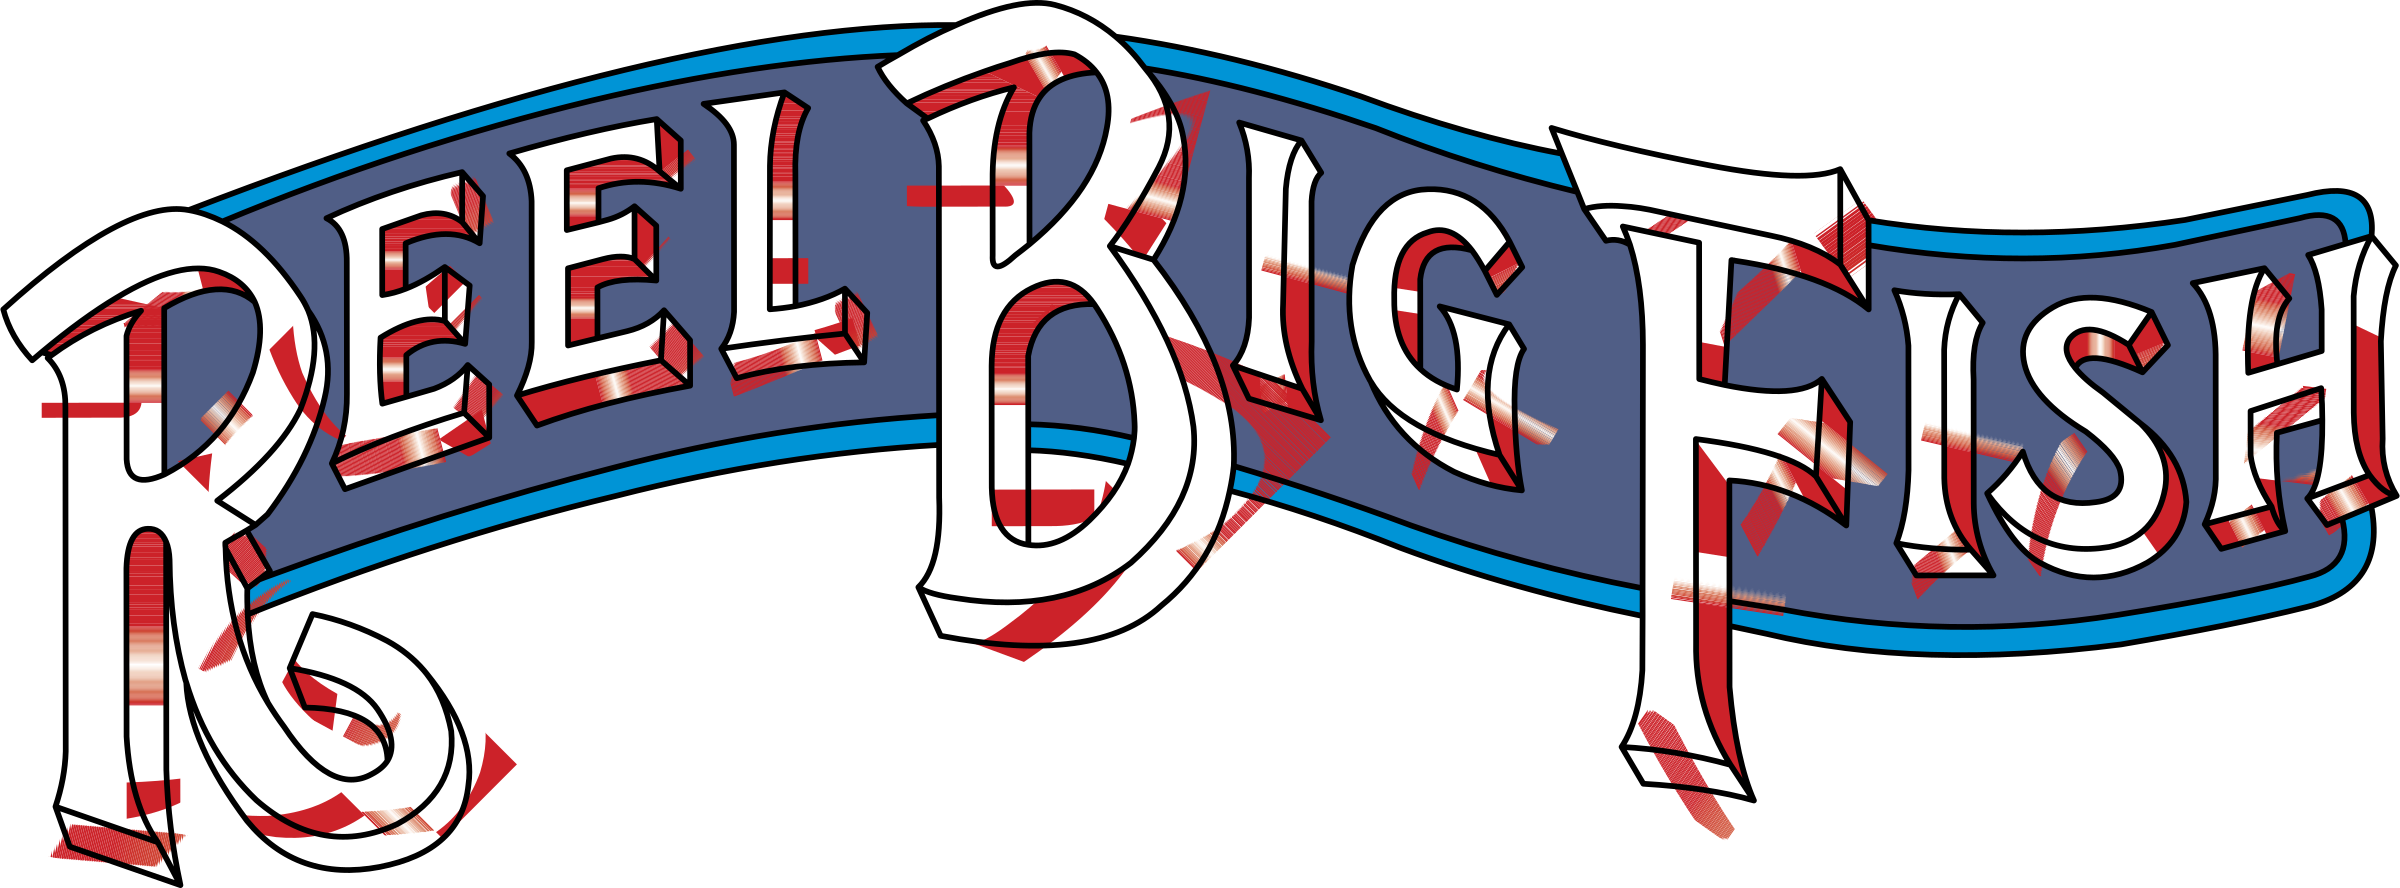 Reel Big Fish Logo Png Transparent - Reel Big Fish Background (2400x888), Png Download